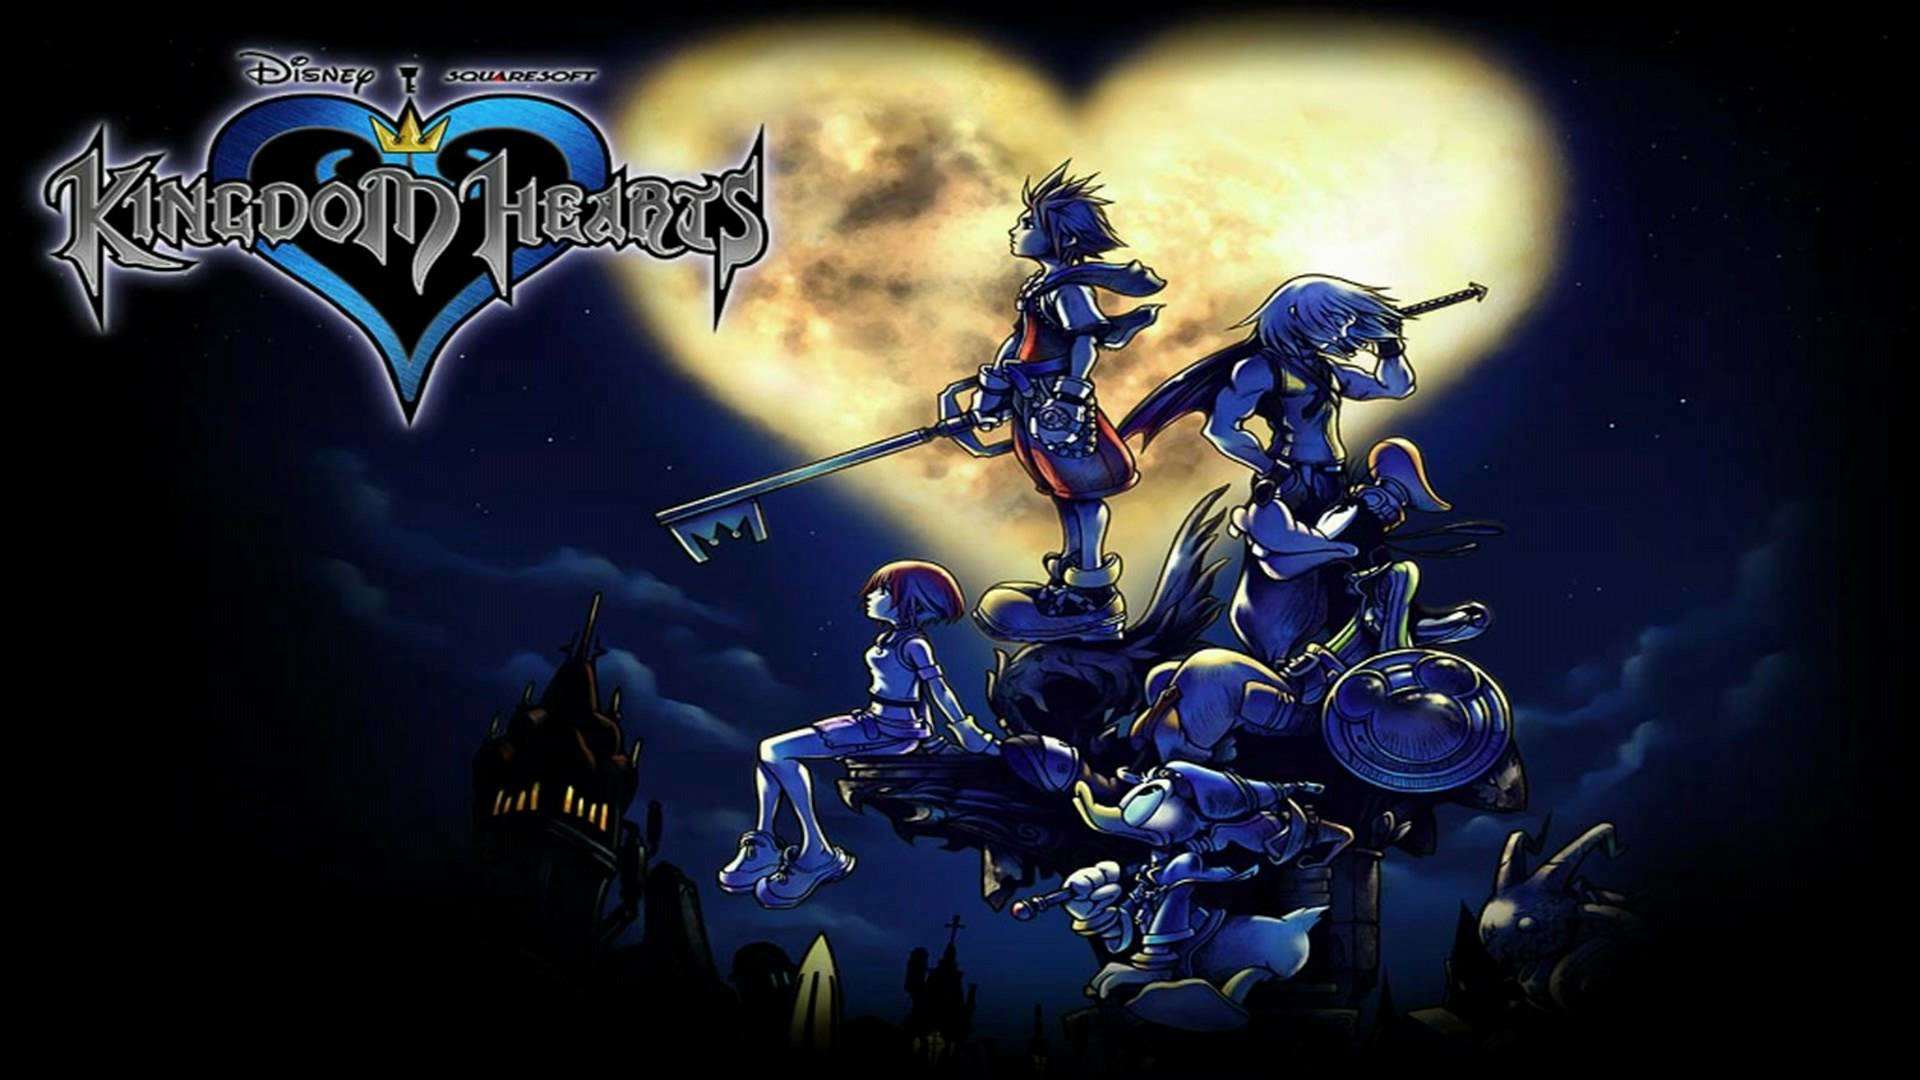 王国之心 Kingdom Hearts 的图片